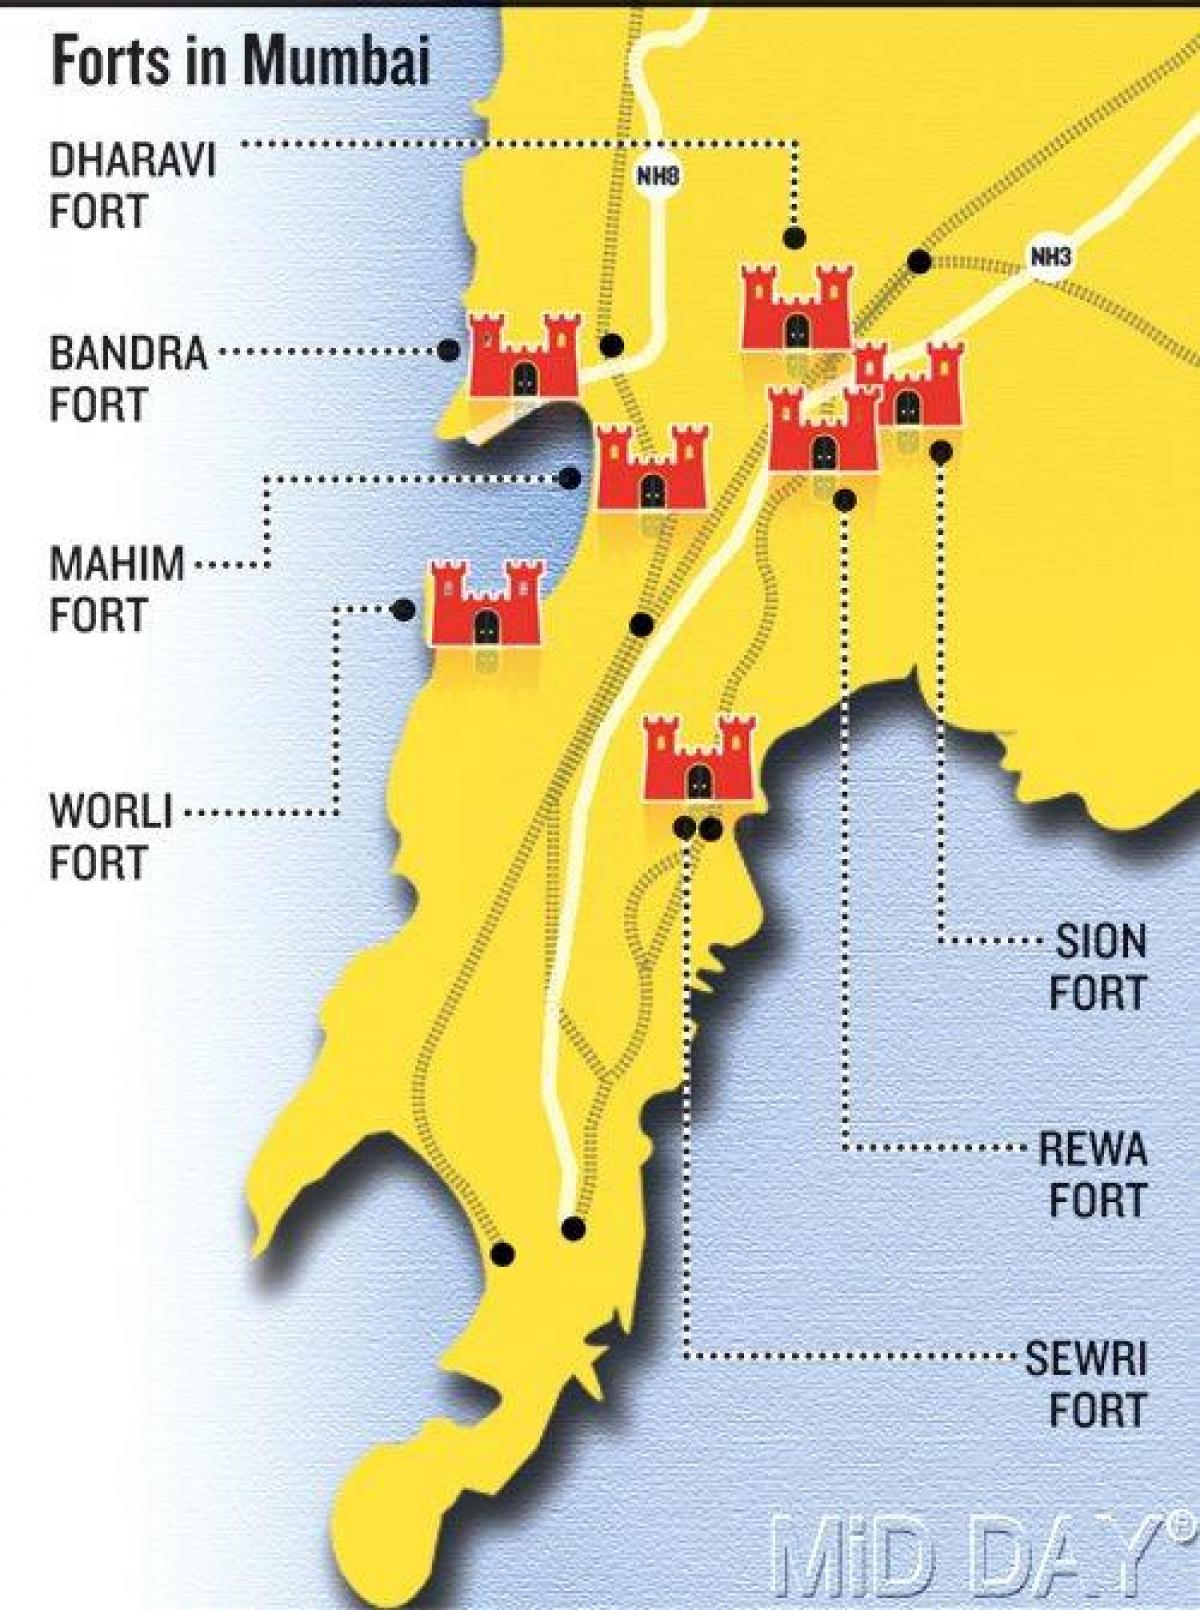 Mumbai fort area mapa